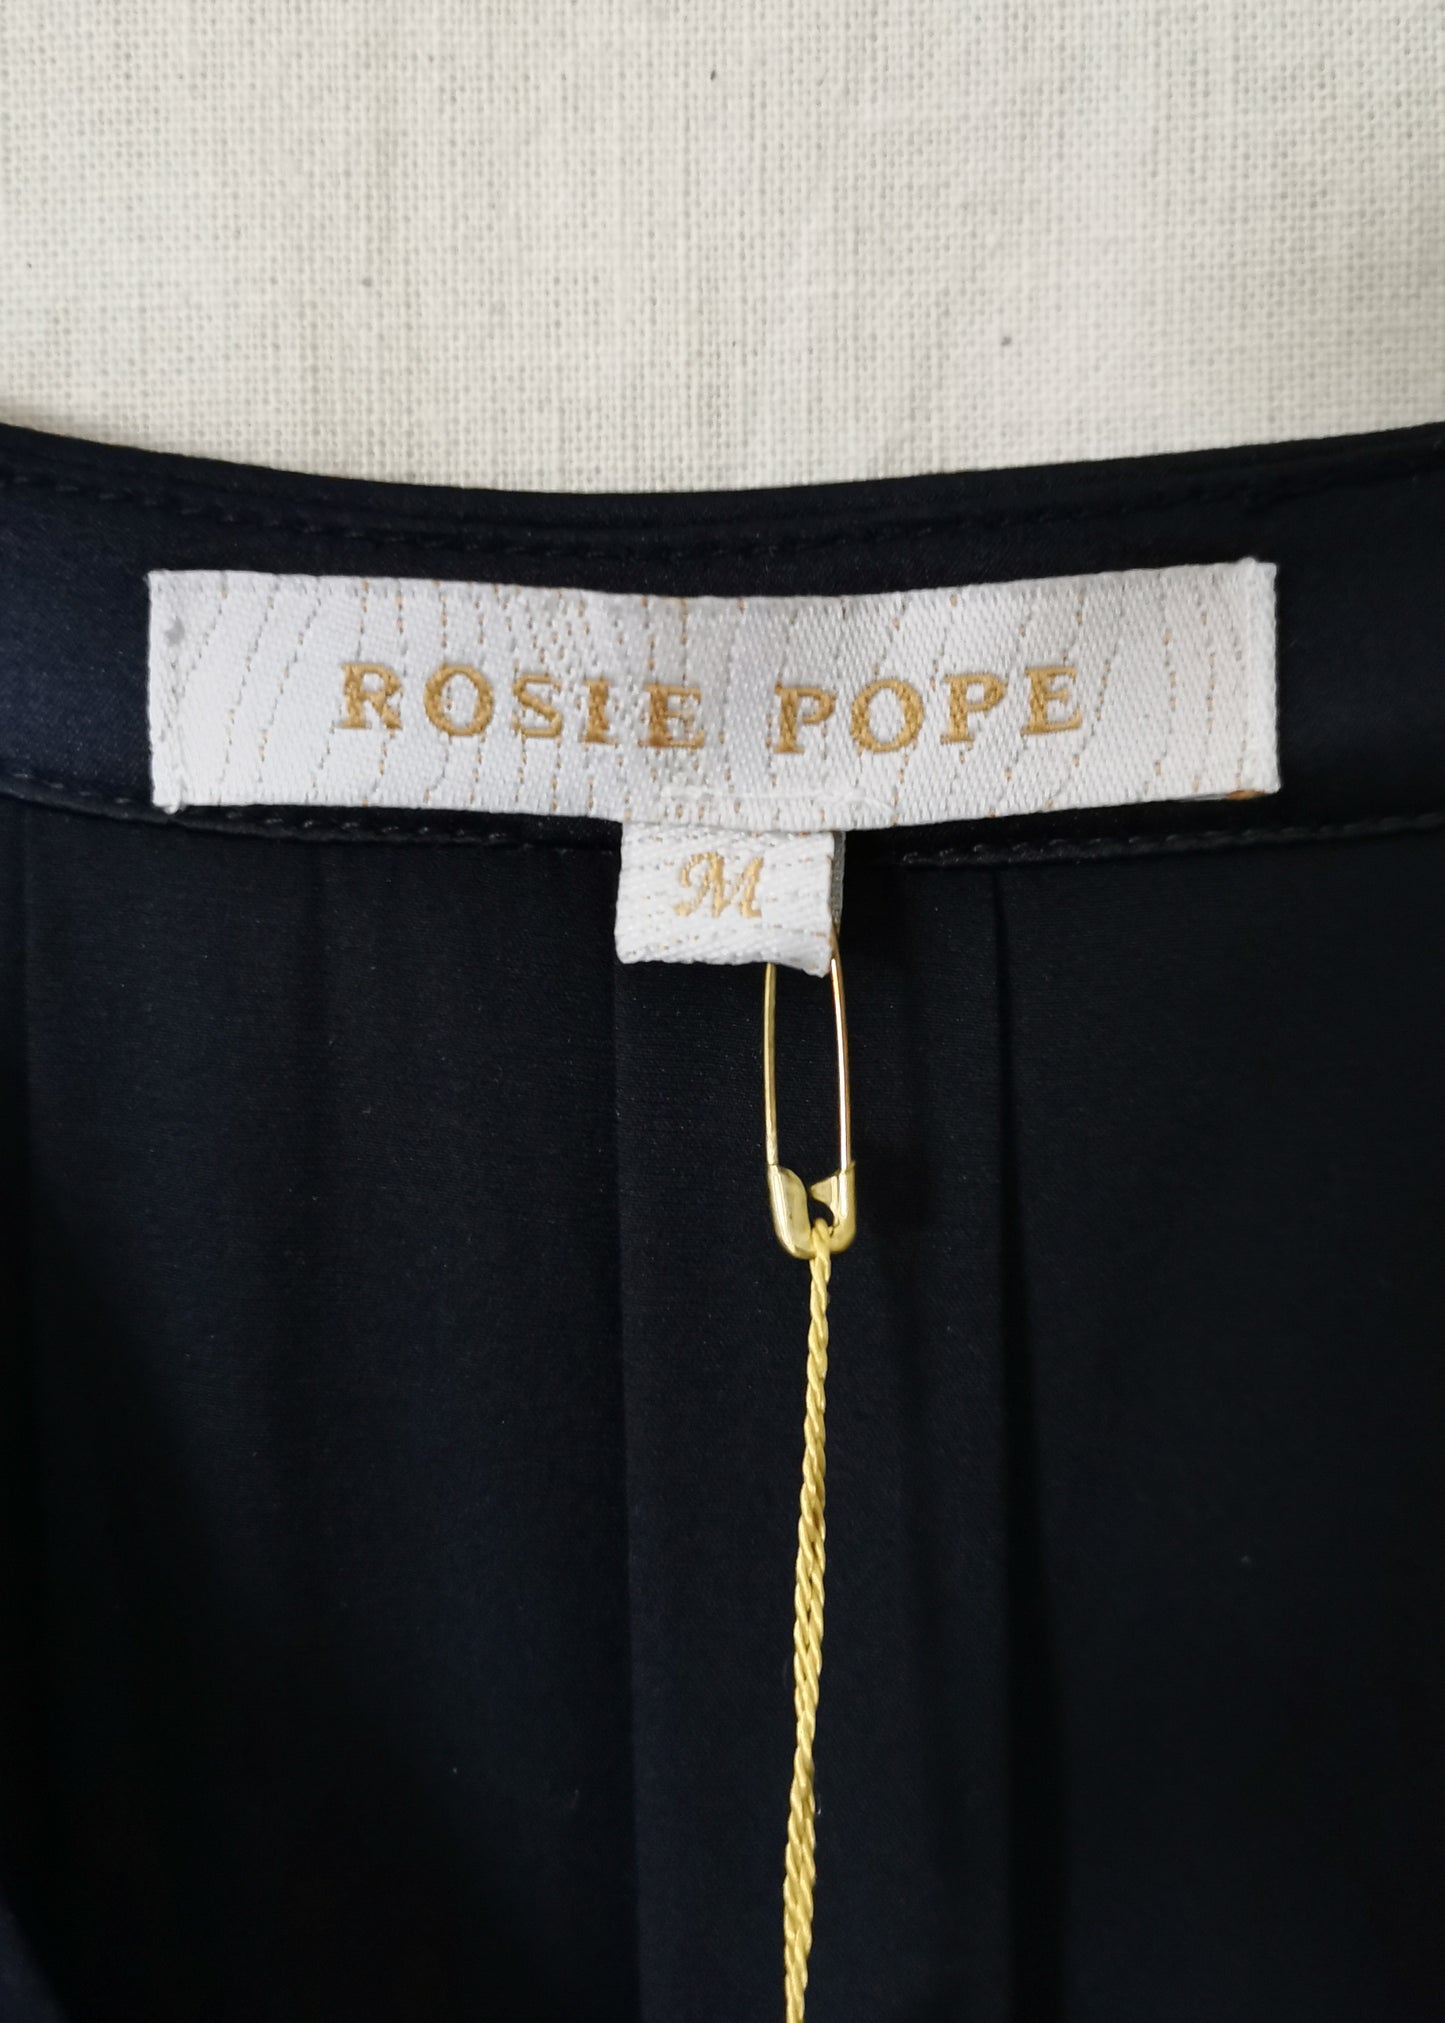 Rosie Pope Maternity Silk Dress (M)